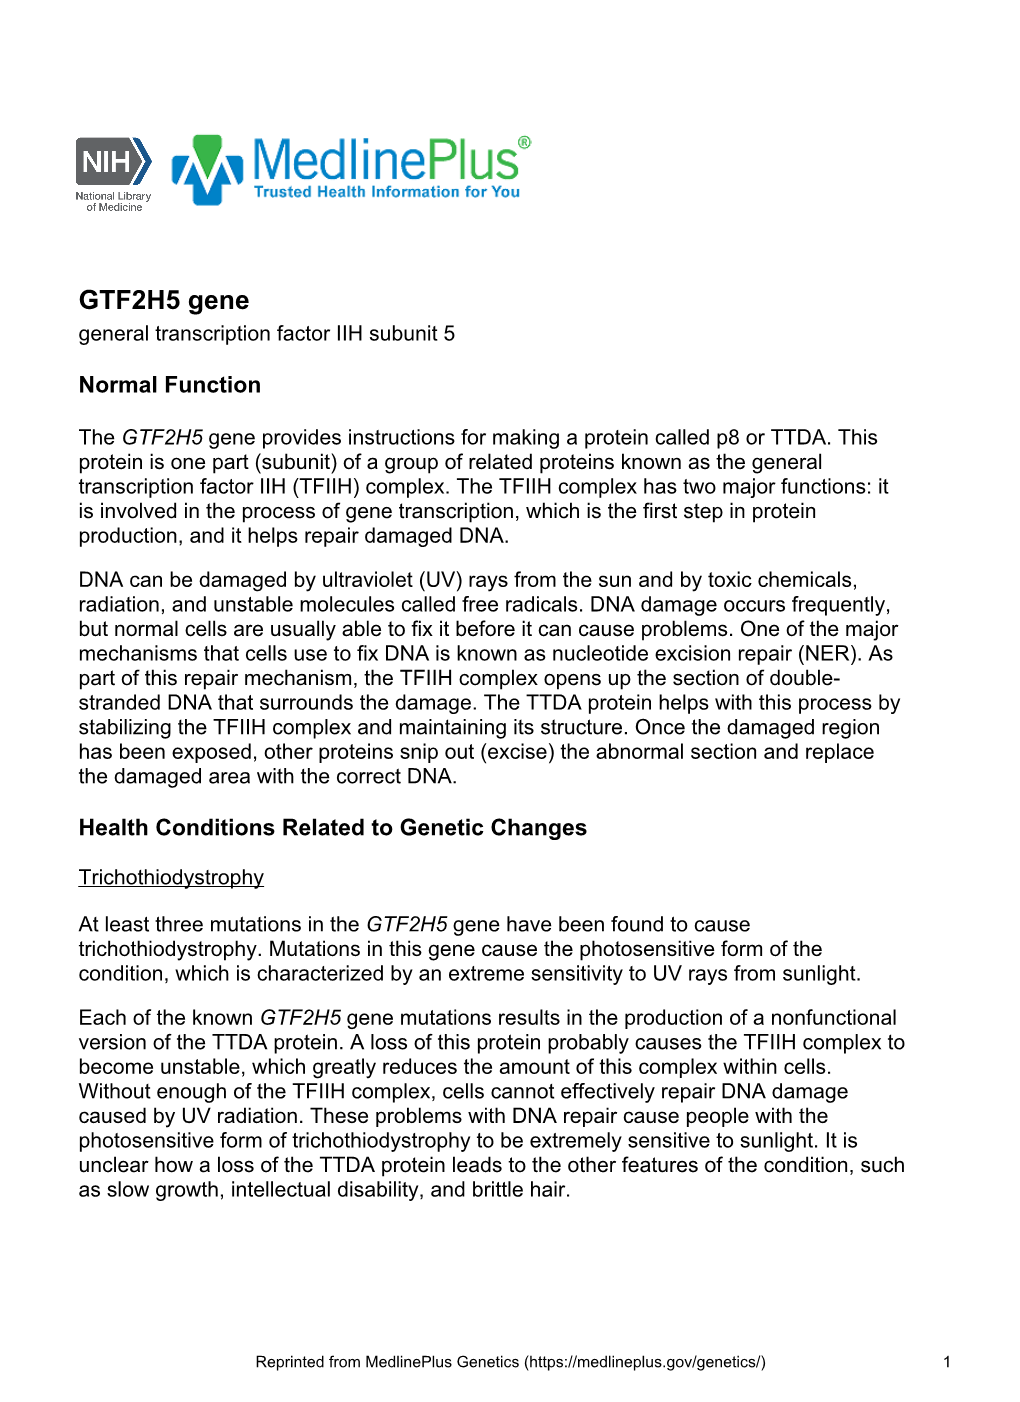 GTF2H5 Gene General Transcription Factor IIH Subunit 5